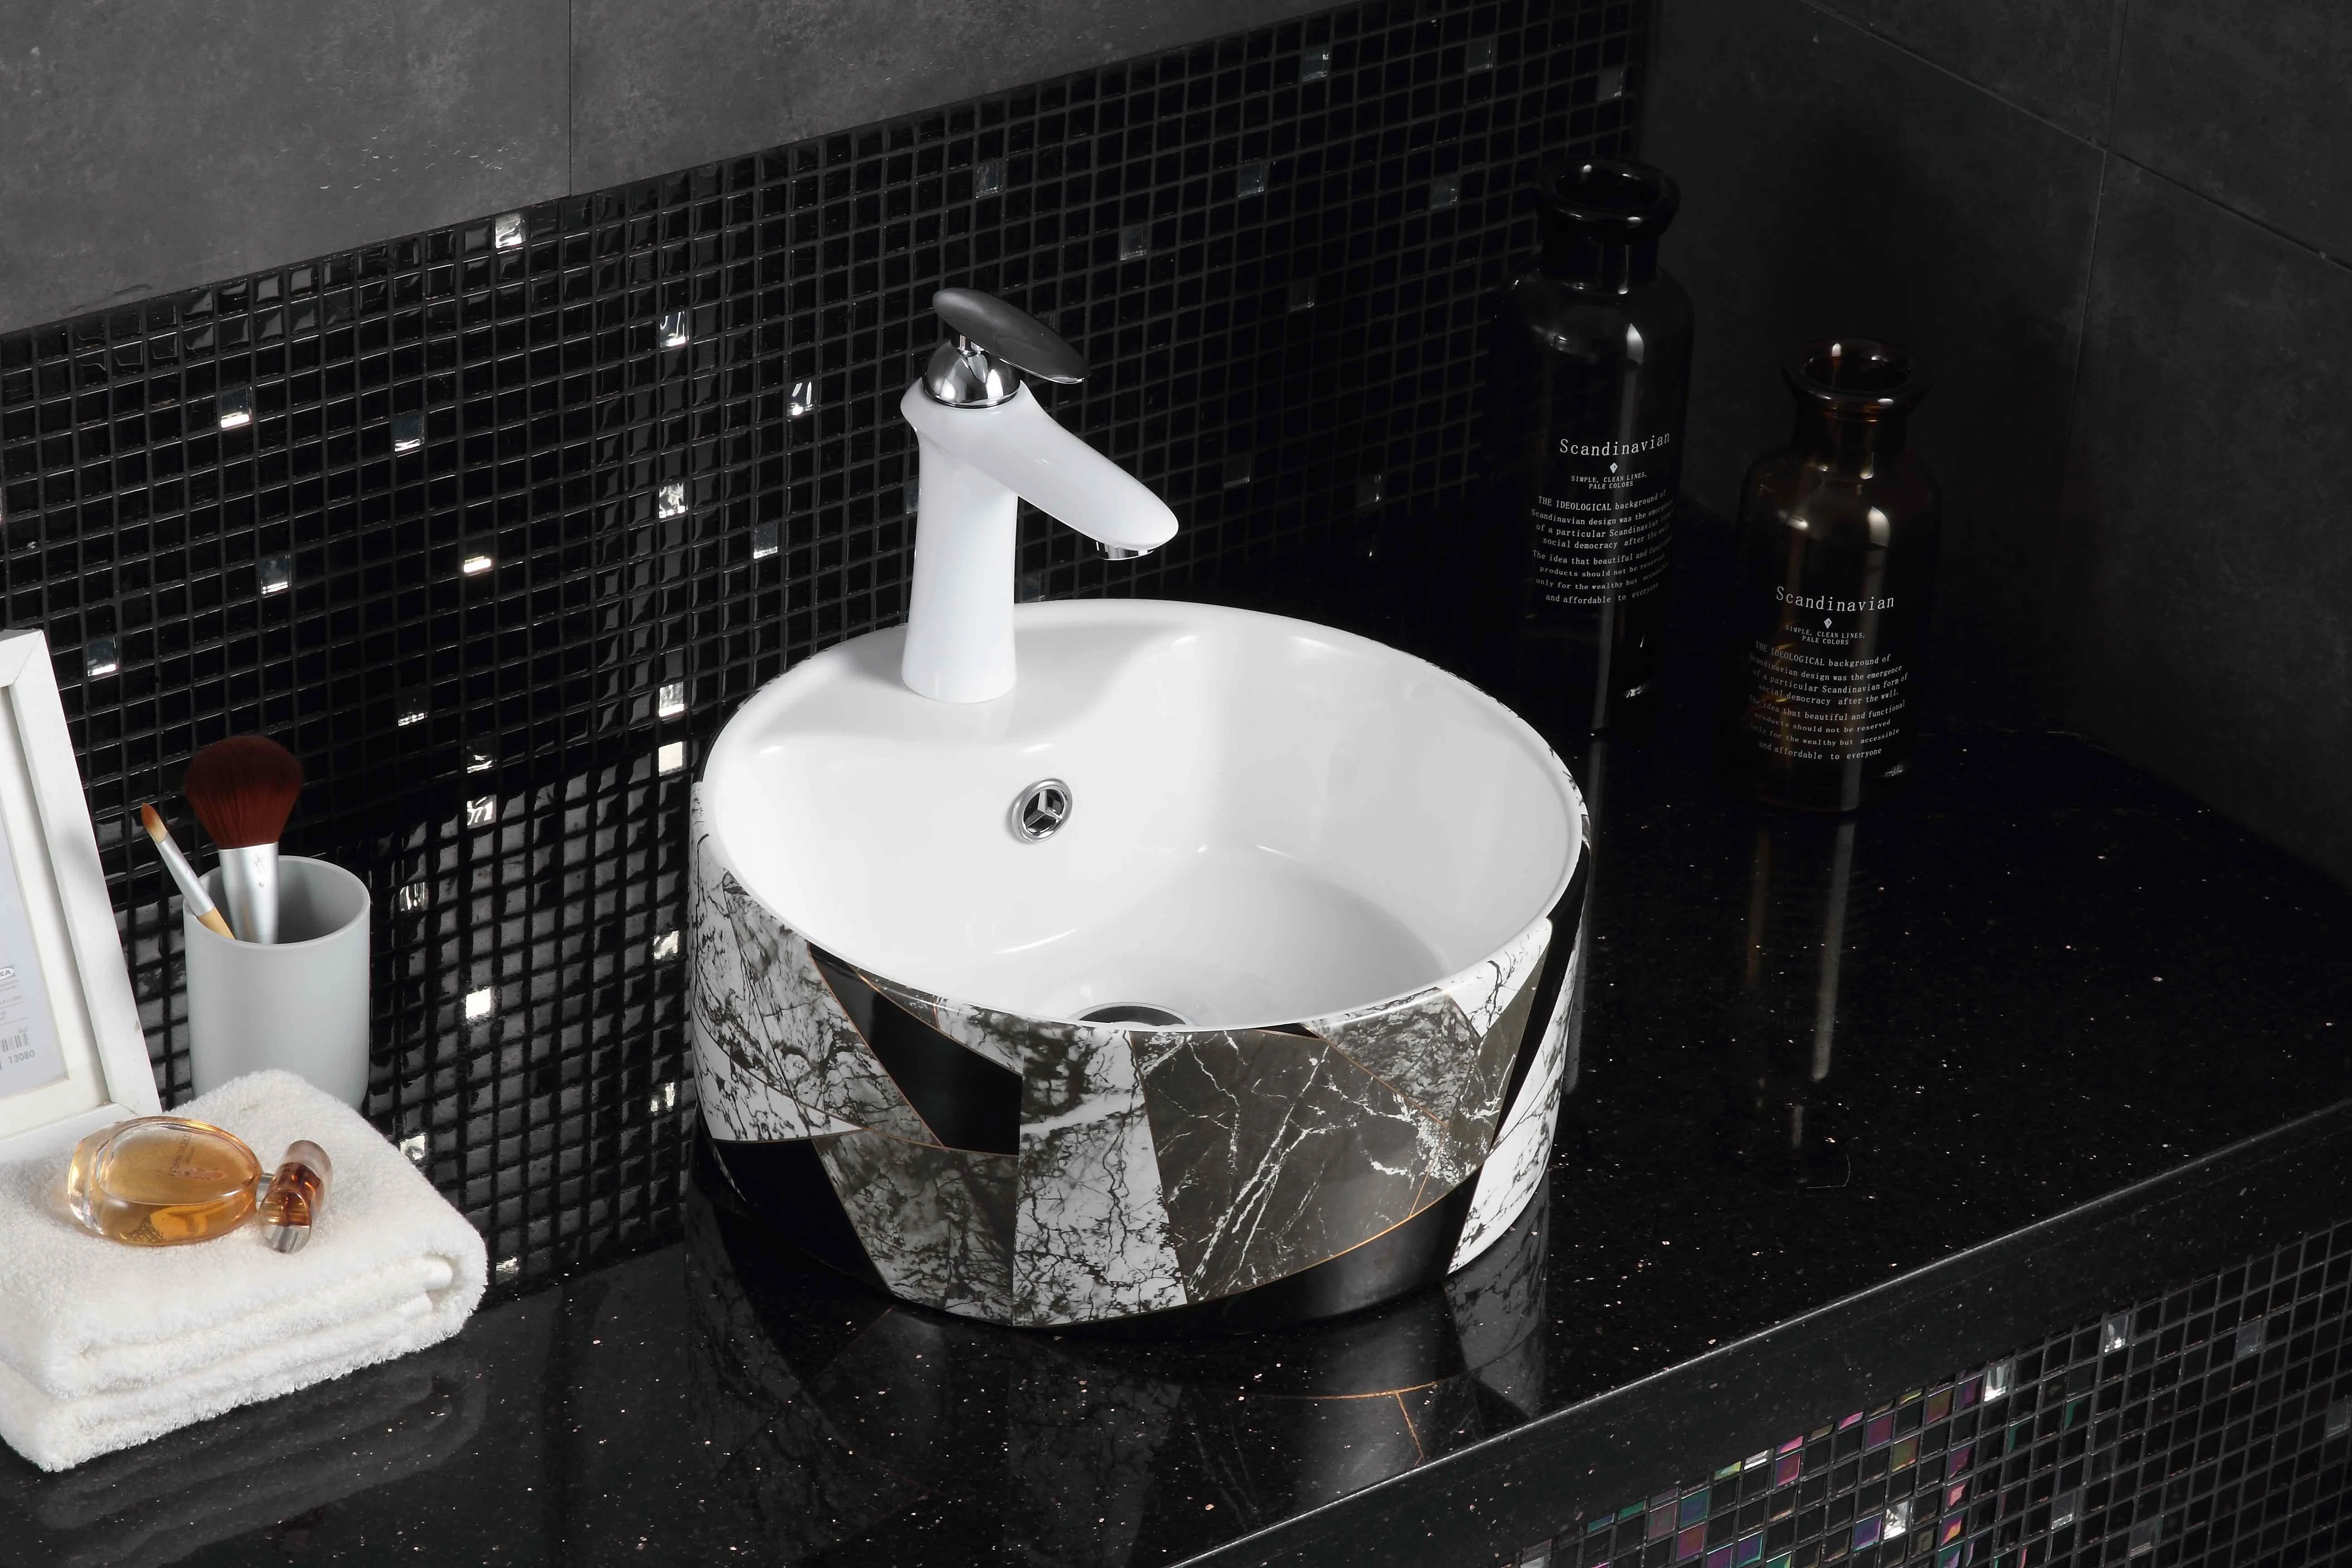 High quality wholesale modern fashion ceramic bathroom sink black water drop pattern  art basin